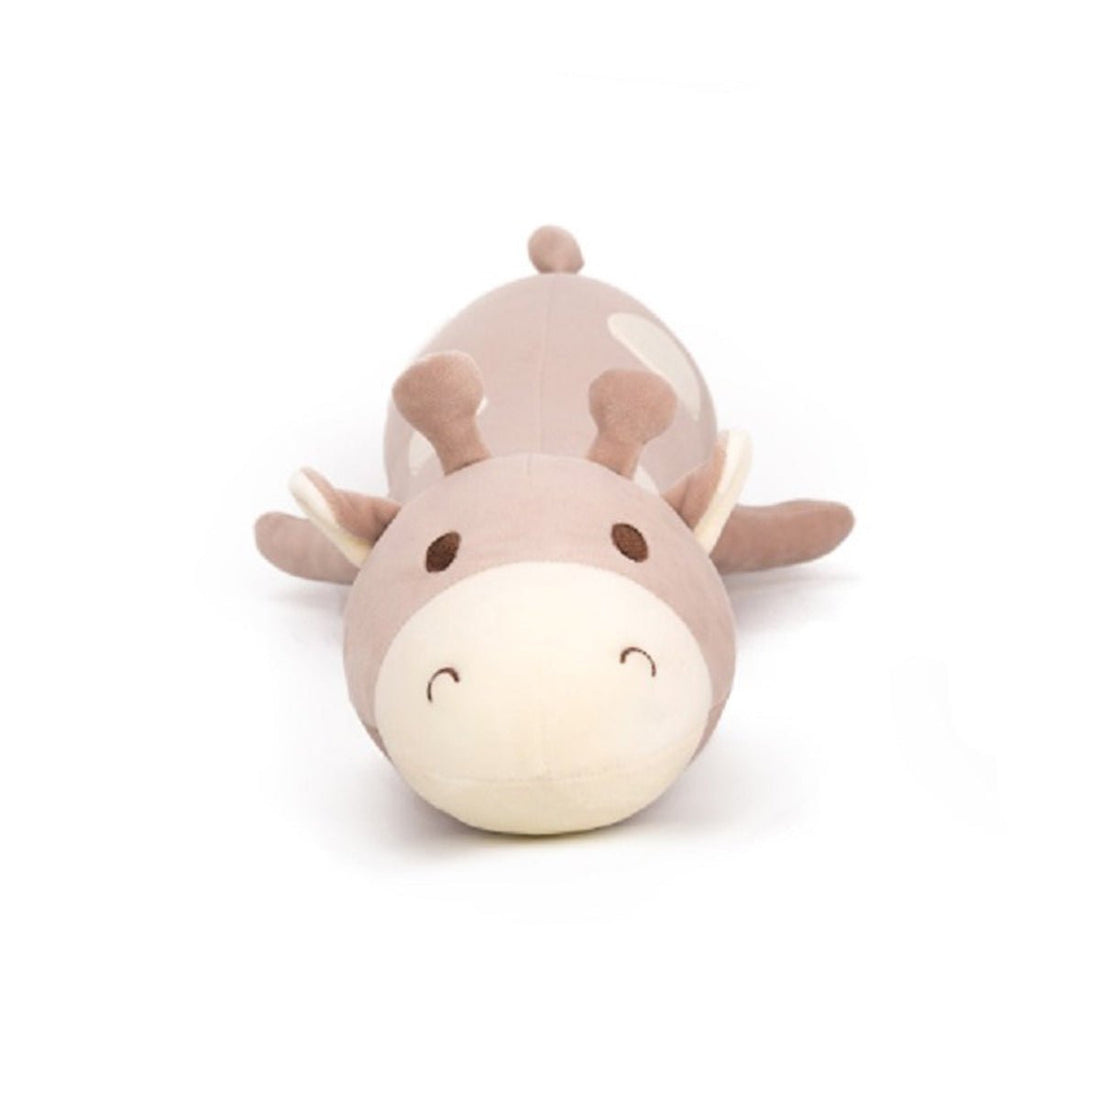 Giraffe Long Cushion Khaki Removable Cover Stuffed Plush Toy - 0cm